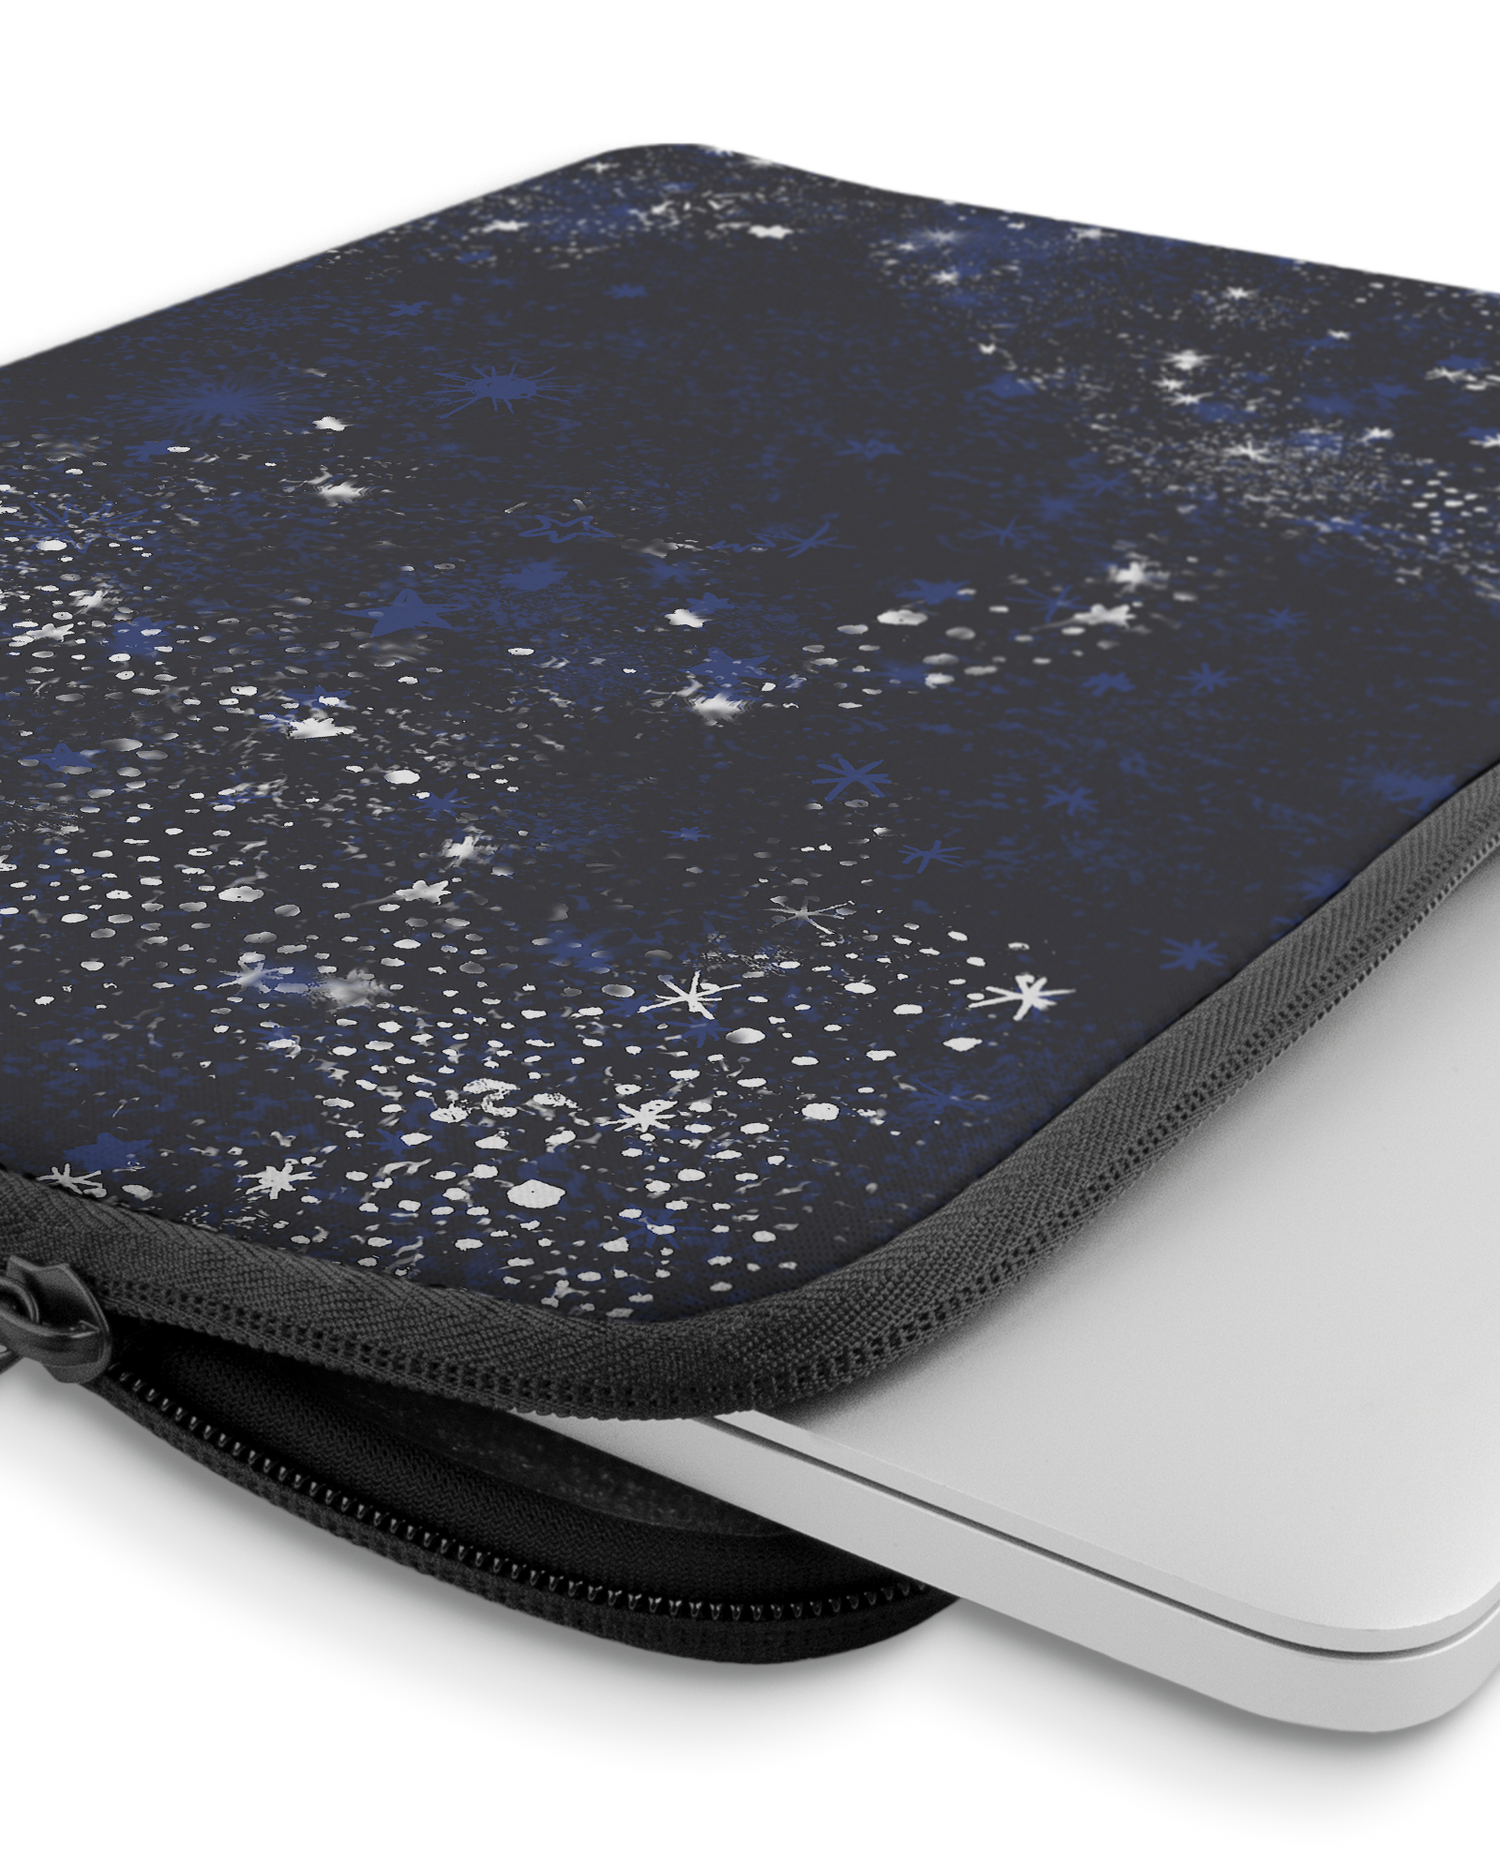 Starry Night Sky Laptop Case 13-14 inch with device inside